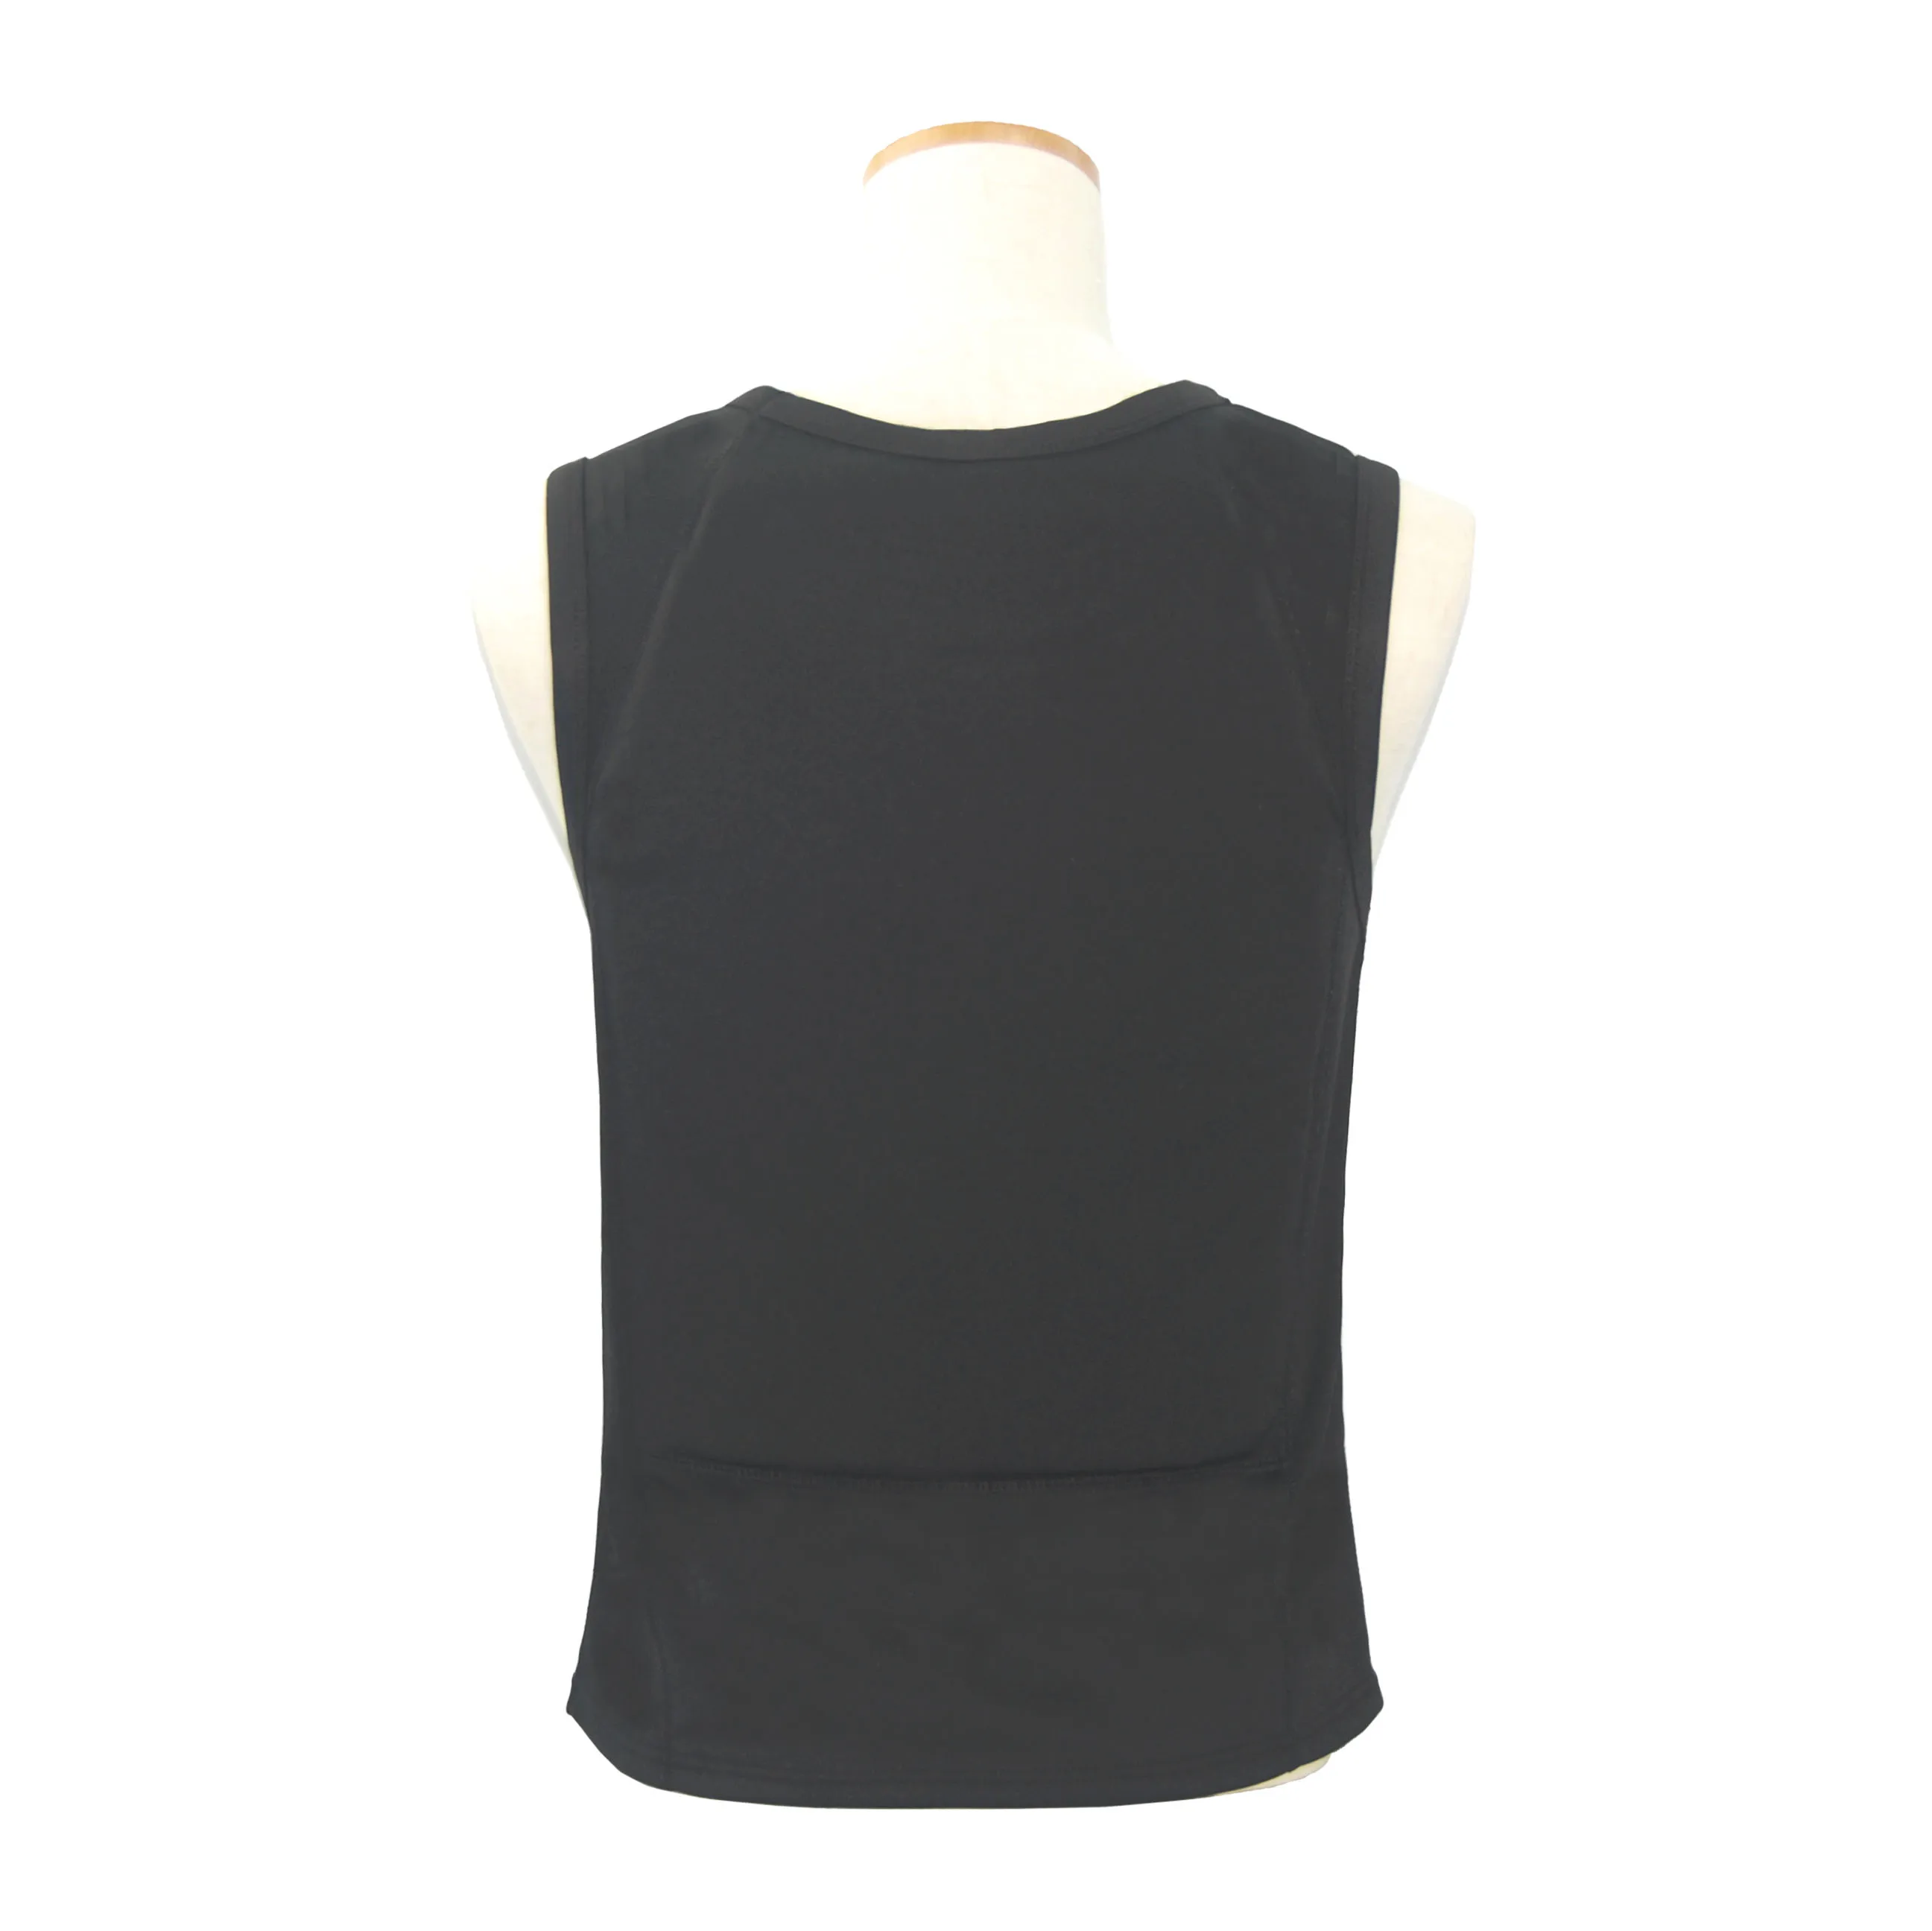 Bulletproof Vest Clothes IIIA level Ultra-comfortable Lightweight Concealed Hidden Inside Wear Soft Anti-Bullet T shirt Clothing